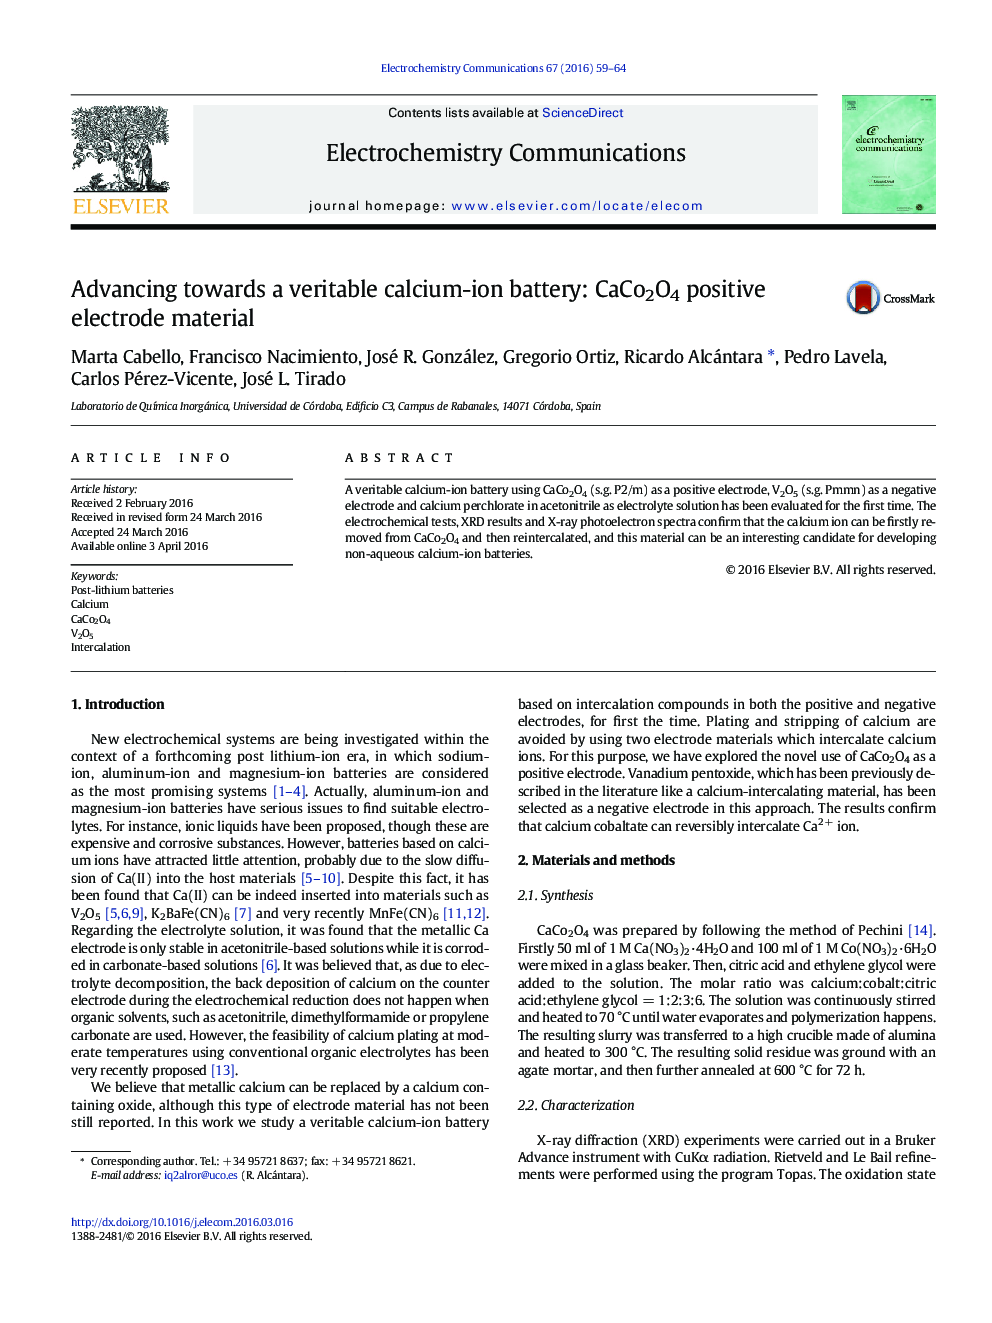 Advancing towards a veritable calcium-ion battery: CaCo2O4 positive electrode material